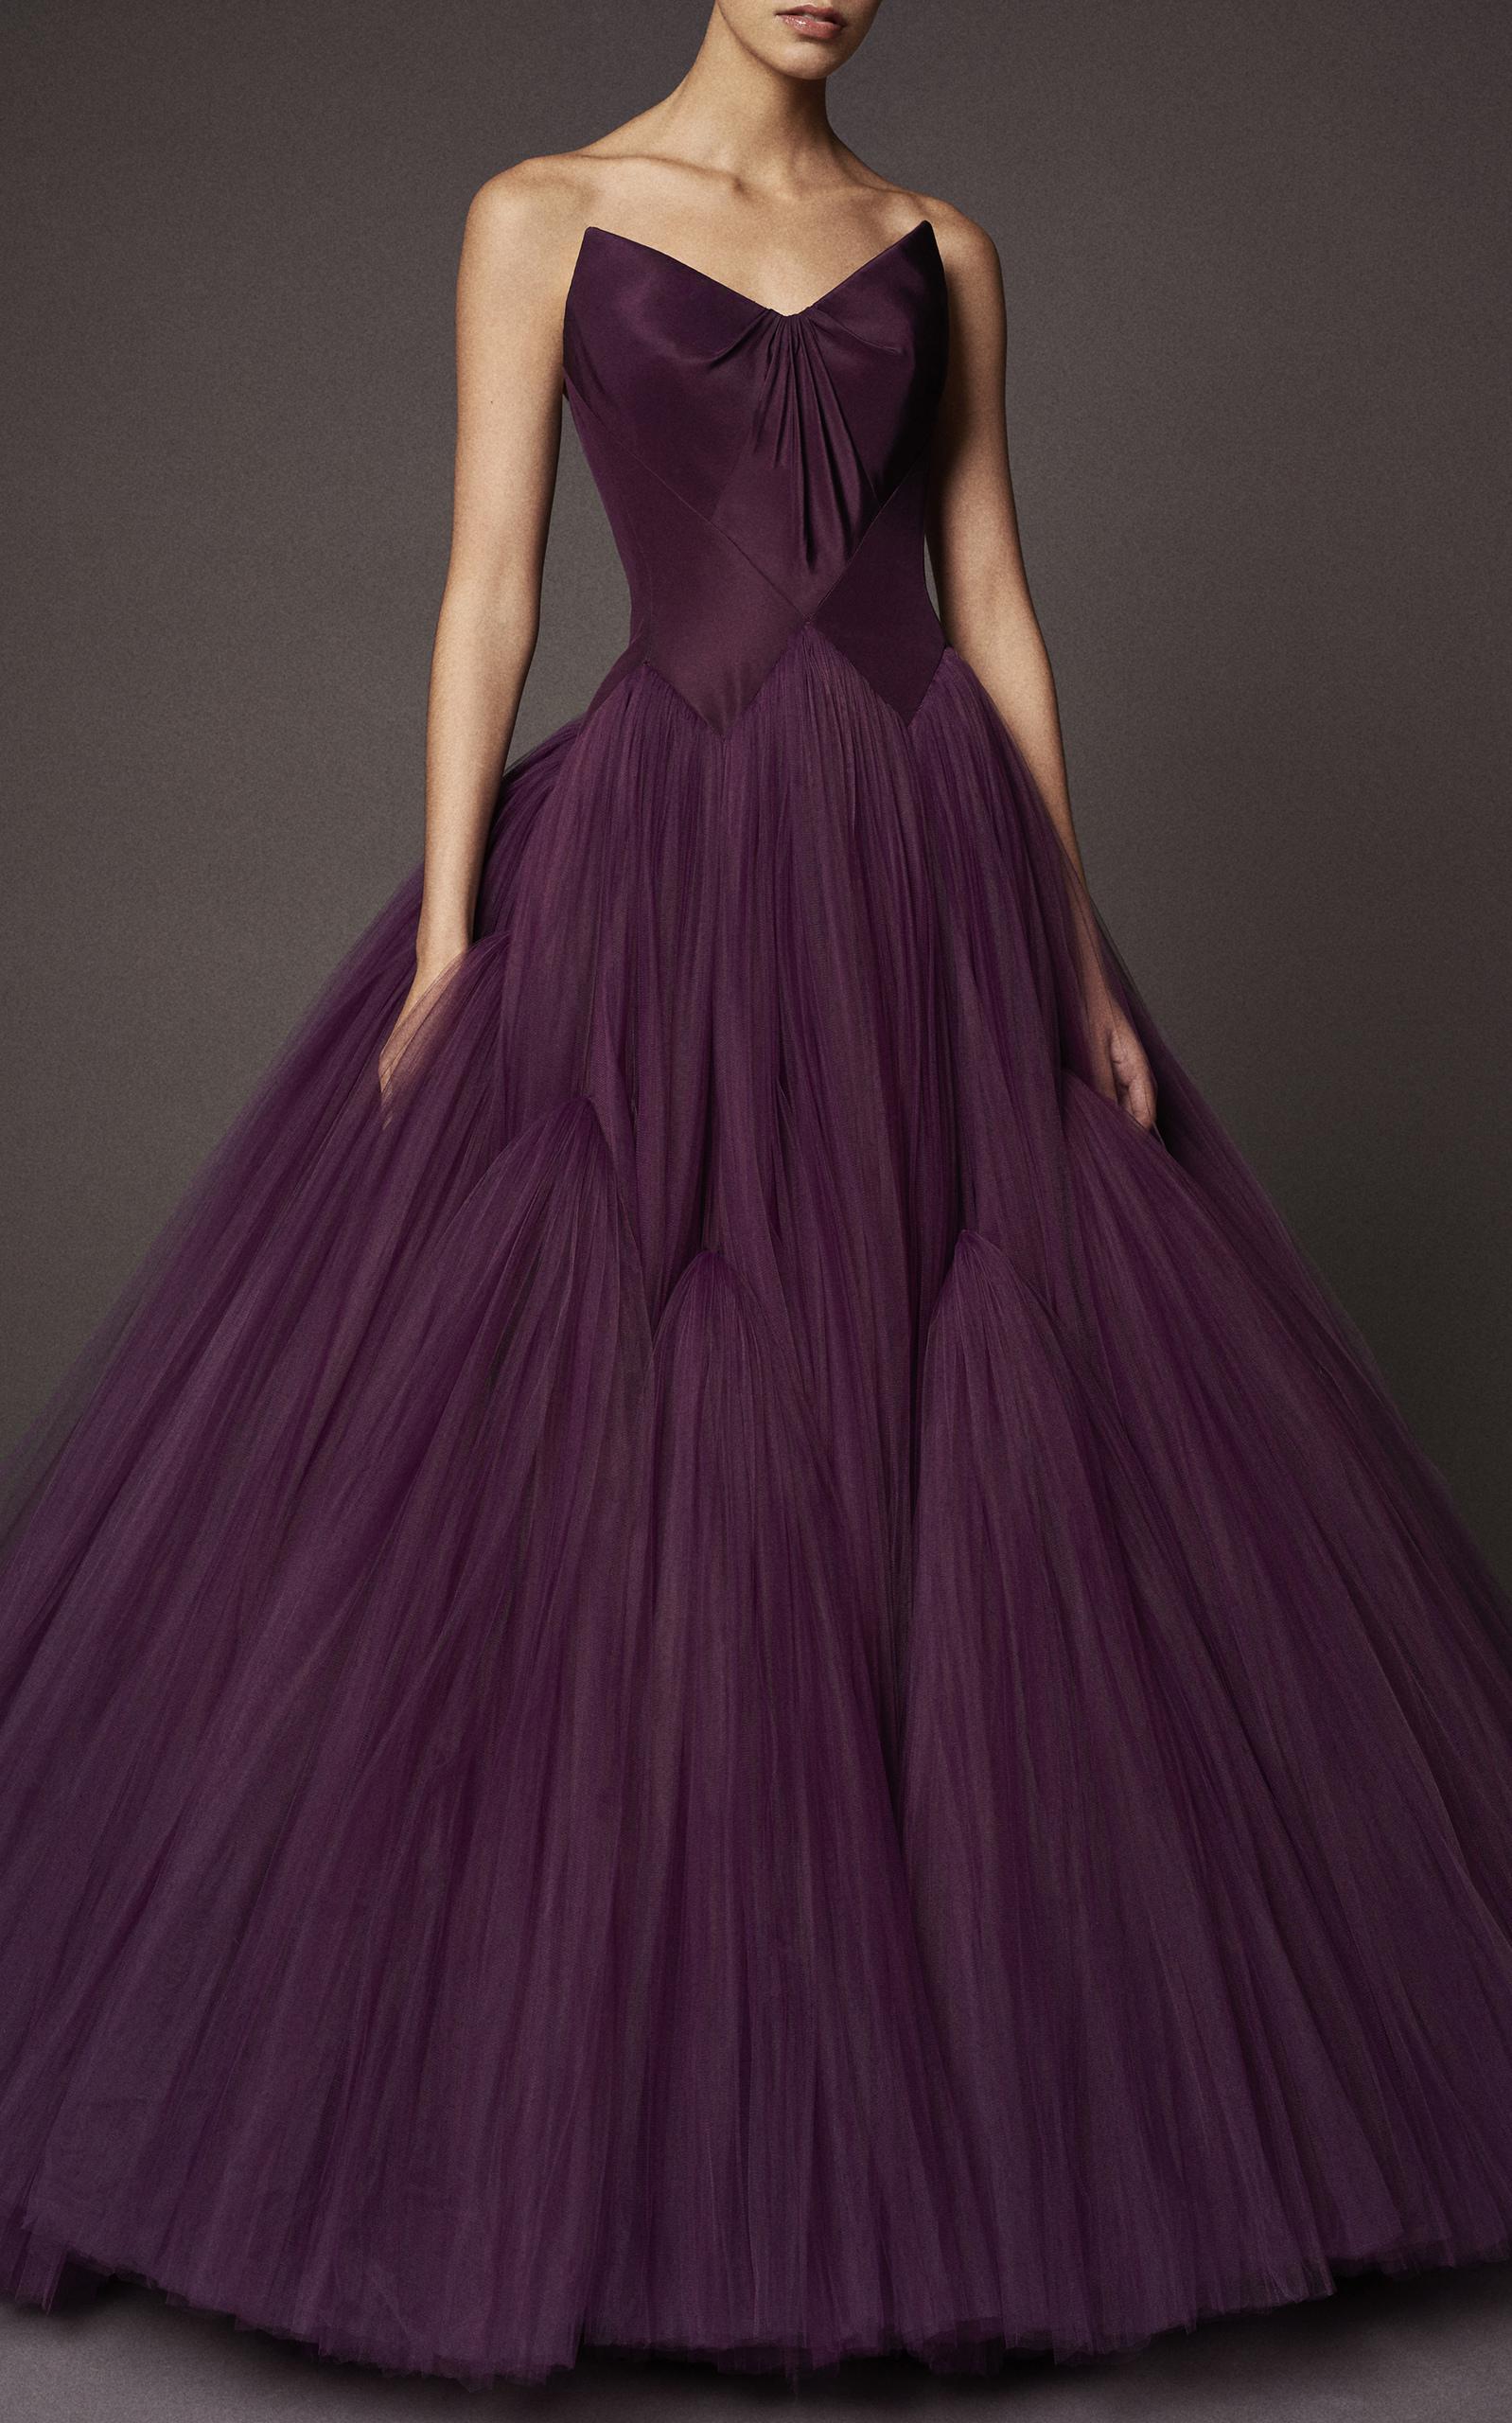 Zac Posen Layered Silk Tulle Ball Gown in Purple - Lyst